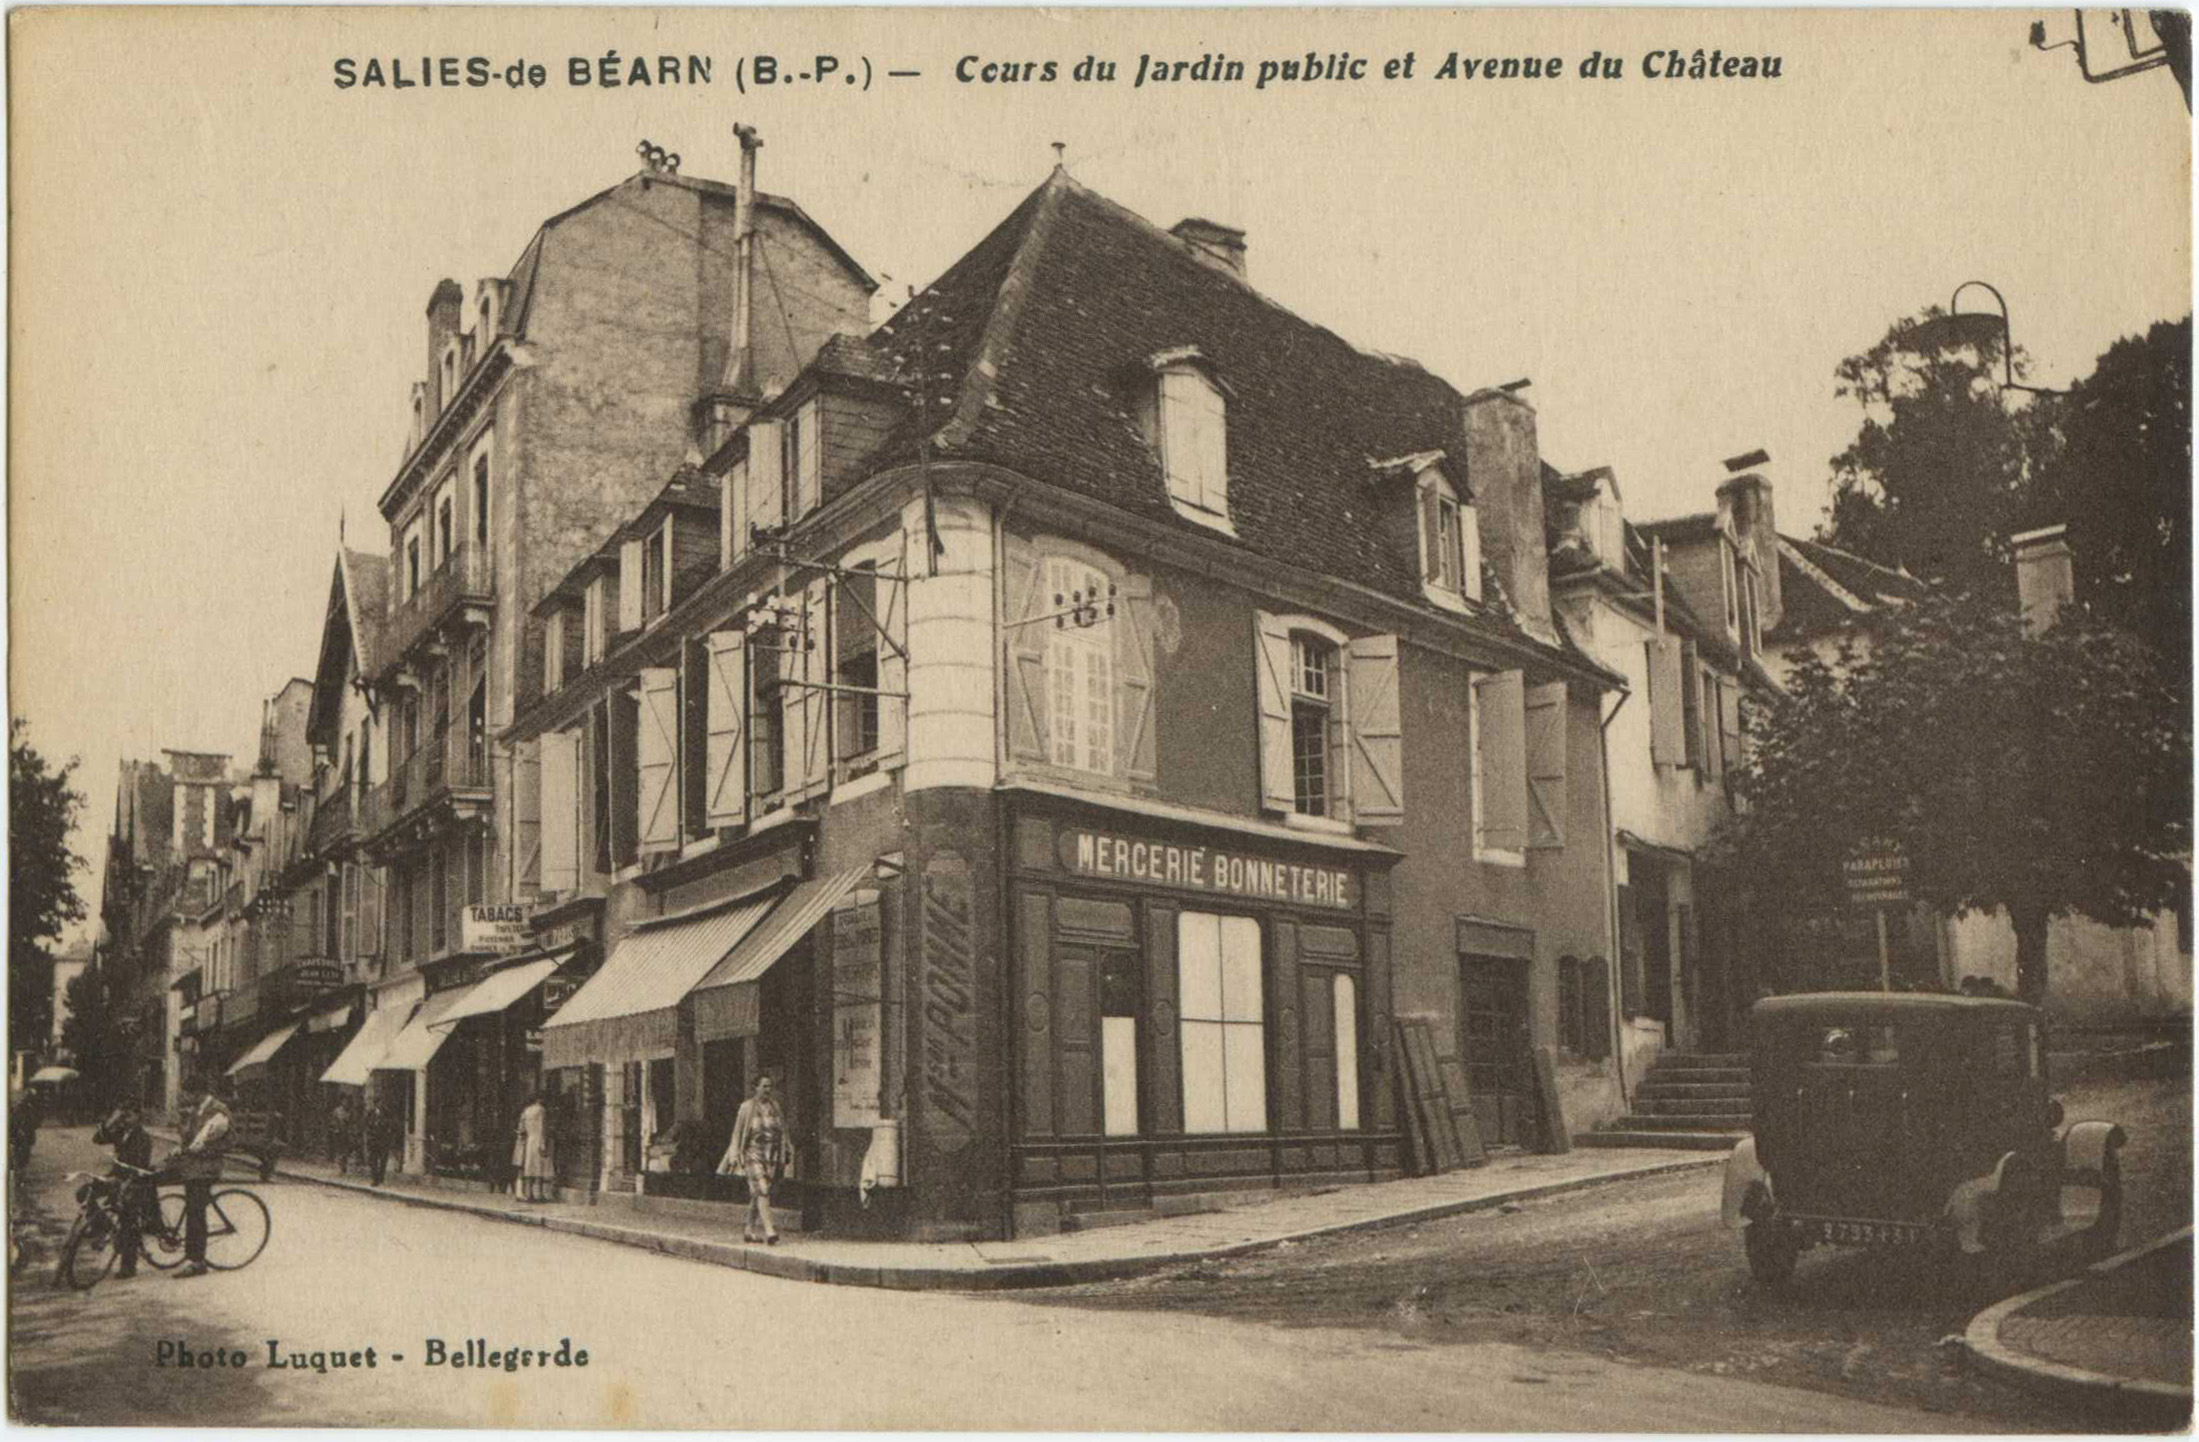 Salies-de-Béarn - Cours du Jardin public et Avenue du Château